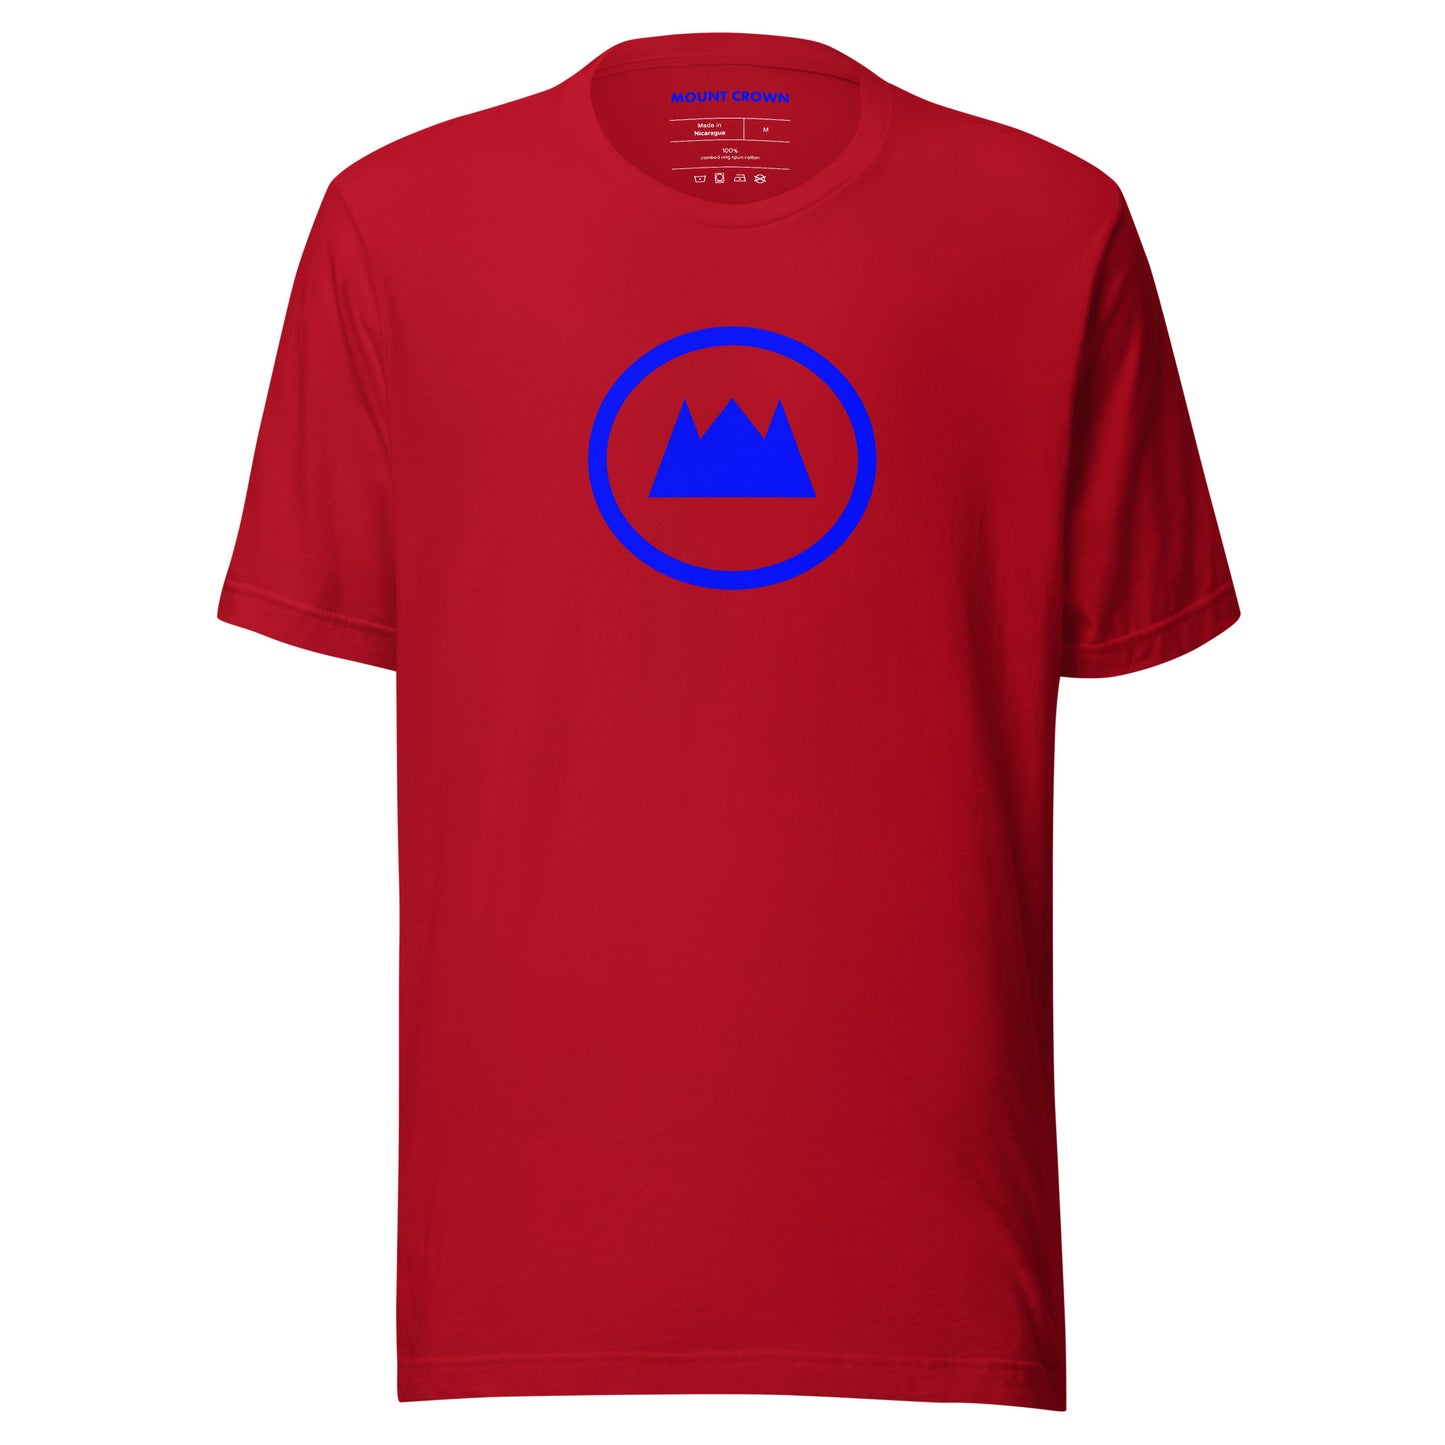 MOUNT CROWN (Bl) T-shirt